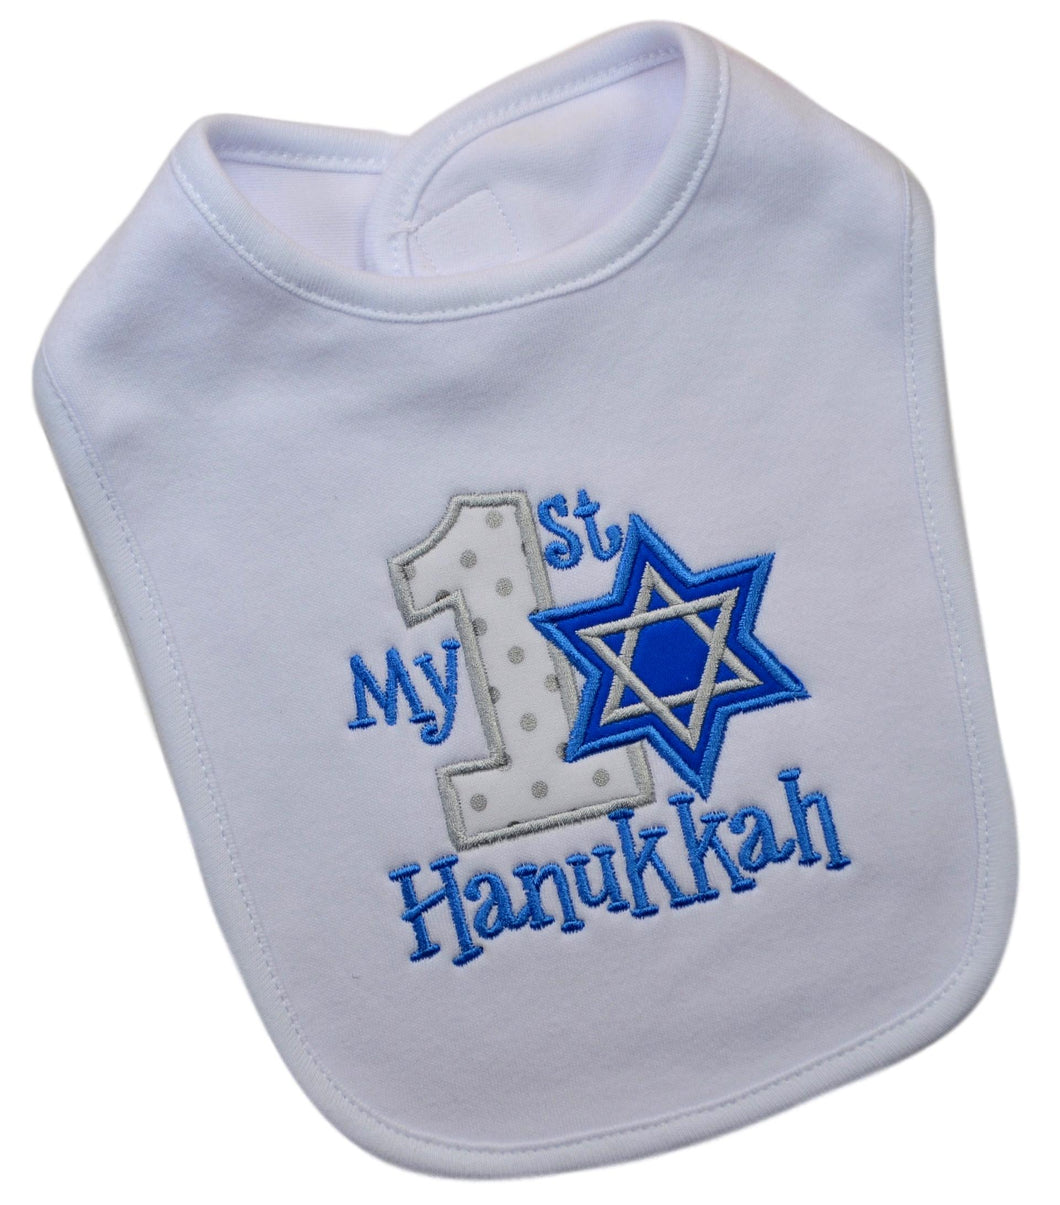 My First Hanukkah Embroidered Baby Bib